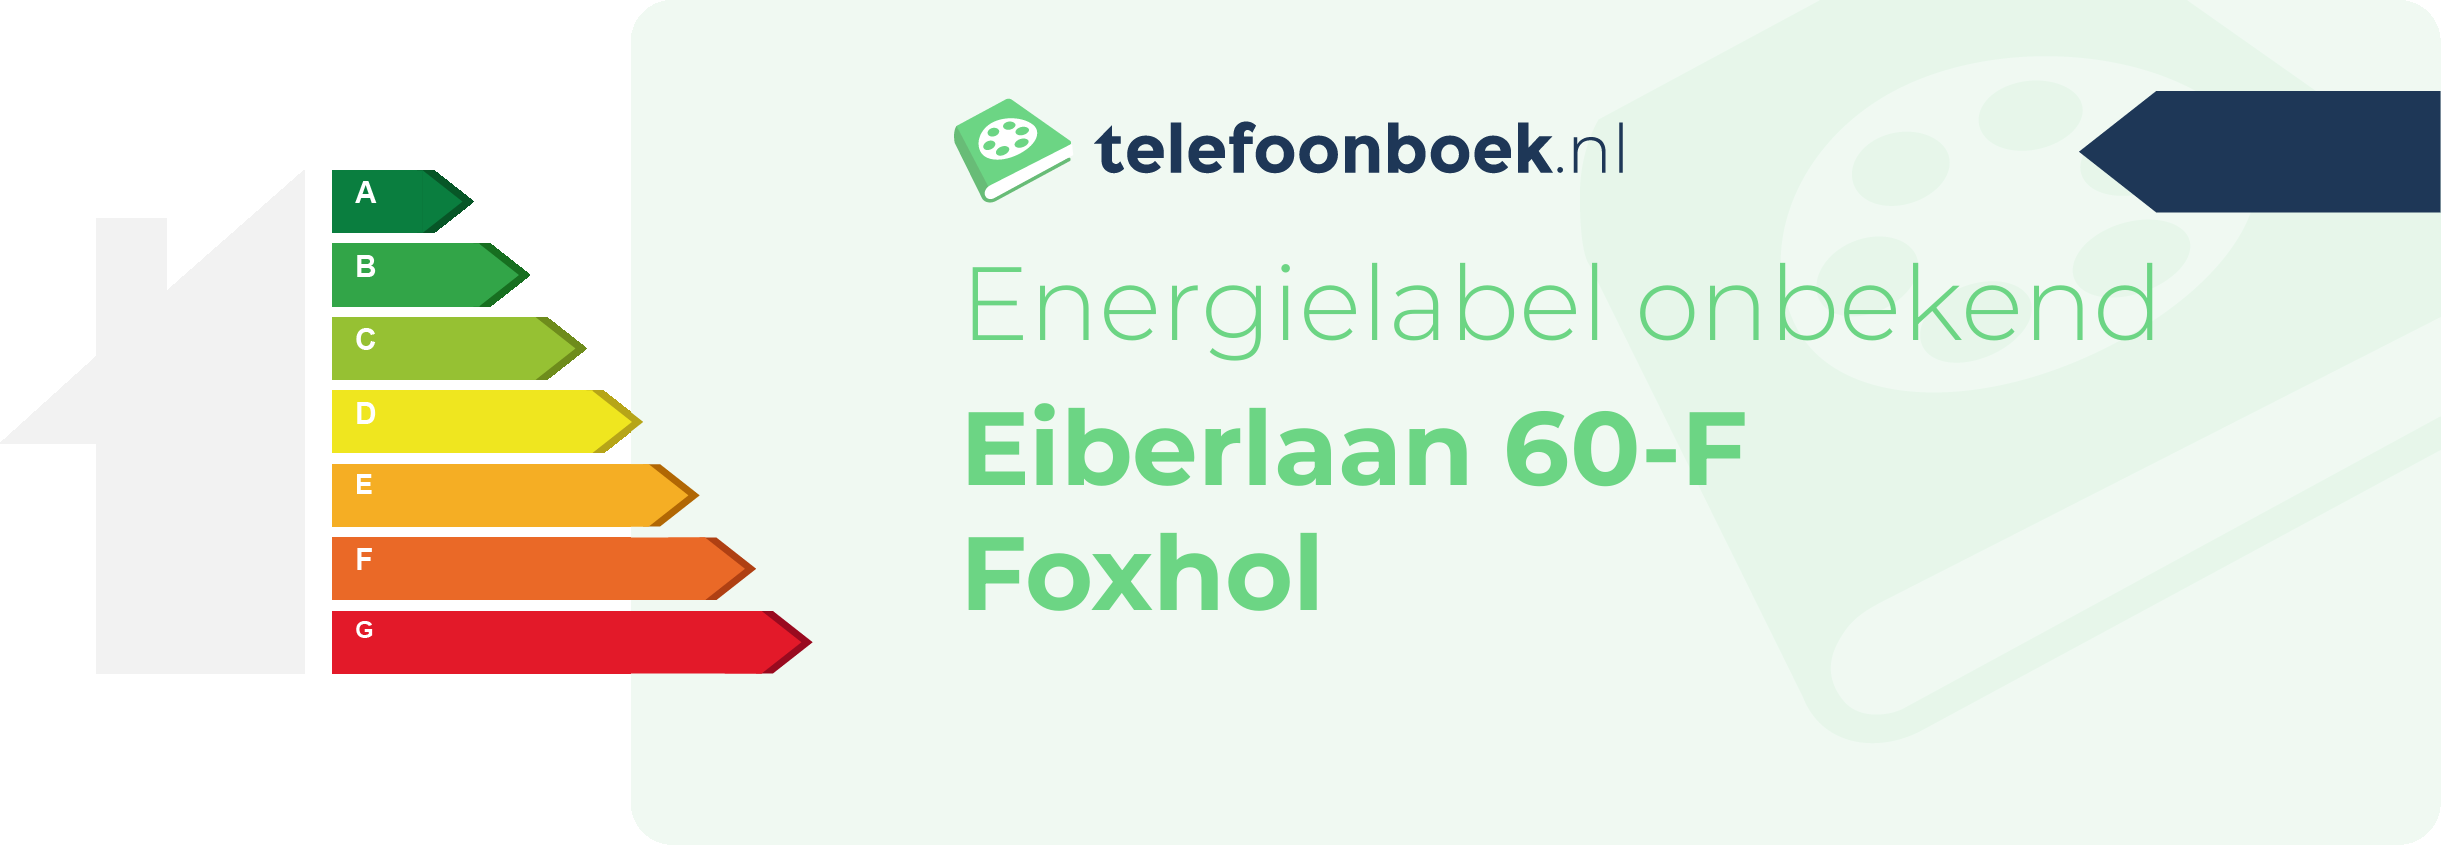 Energielabel Eiberlaan 60-F Foxhol